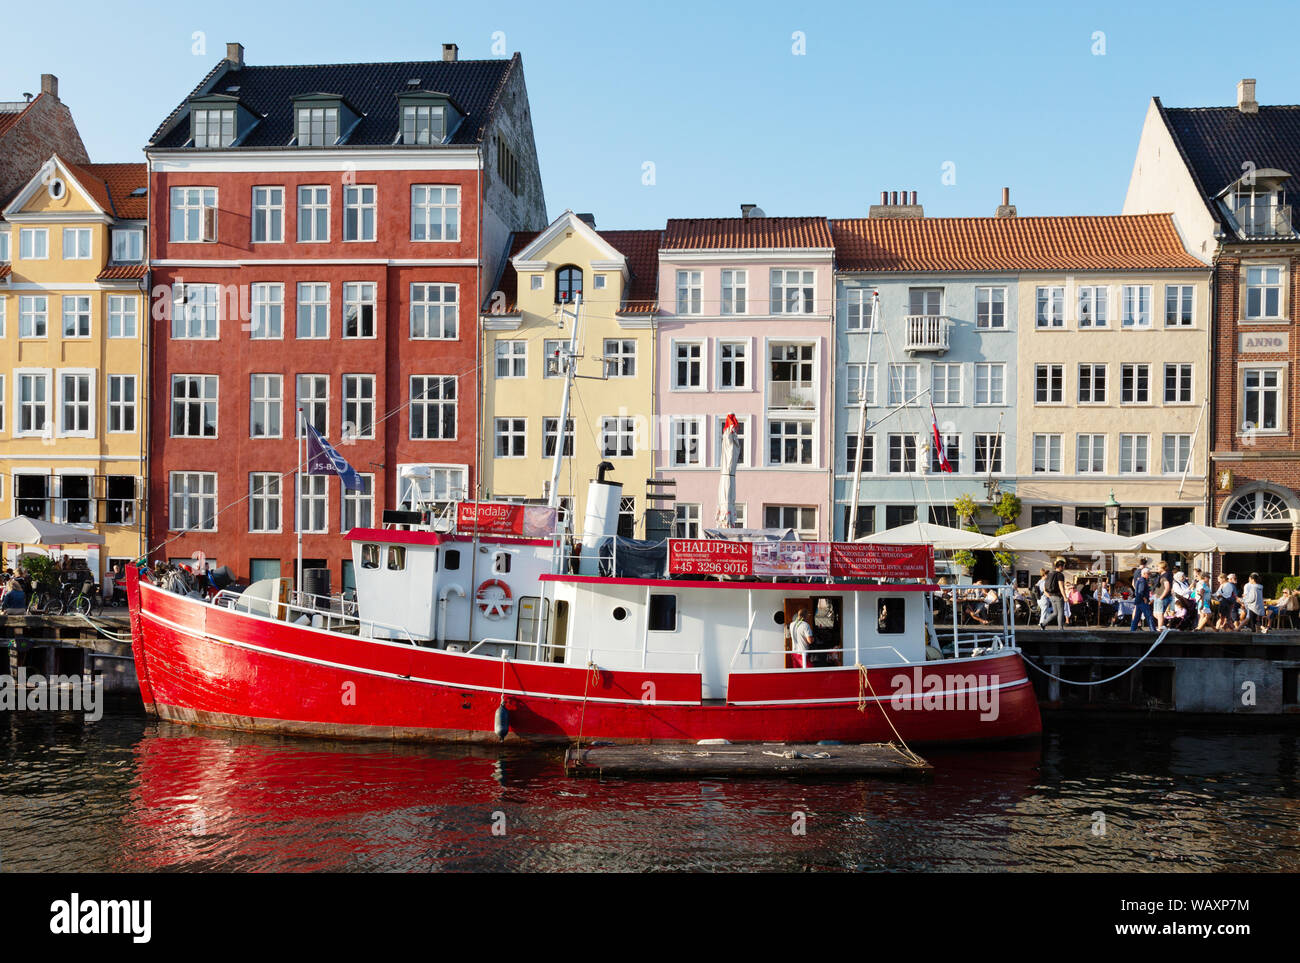 Nyhavn Copenhagen Denmark - colourful buildings and boat in summer sunshine in August, Nyhavn waterfront, Copenhagen Denmark Scandinavia Europe Stock Photo